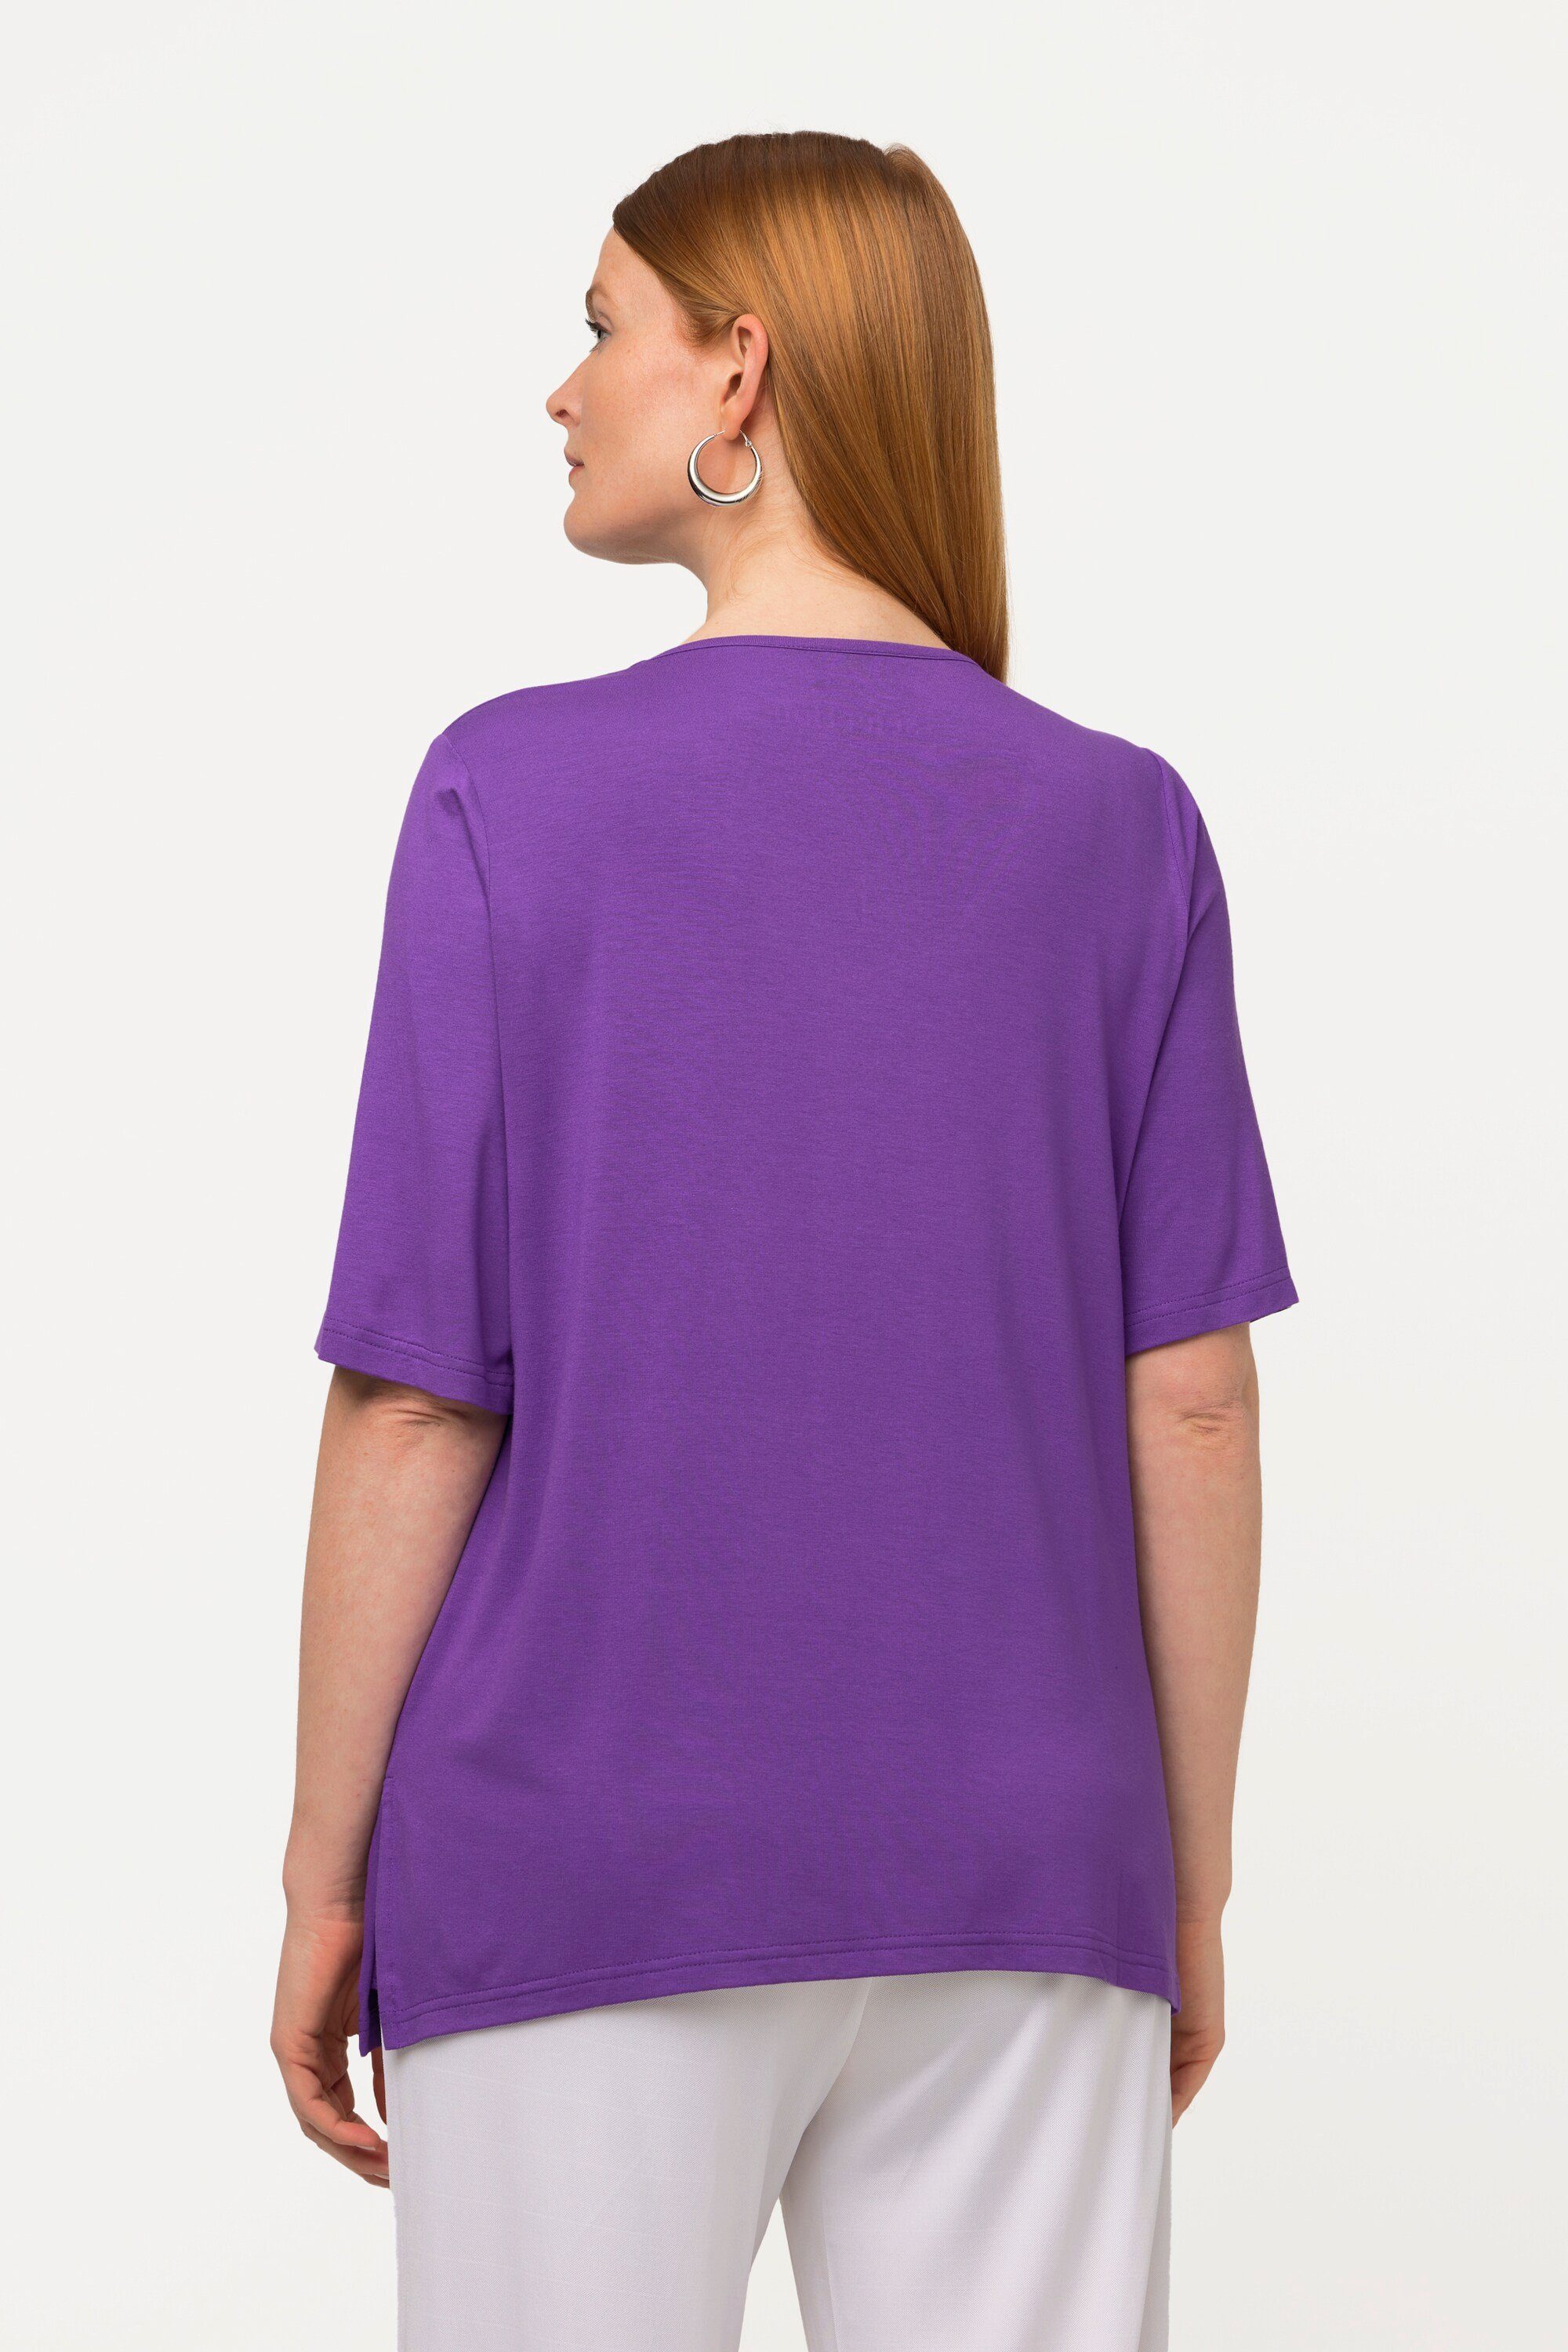 Popken T-Shirt Ulla Rundhalsshirt violett vorne Halbarm V-Ausschnitt doppellagig